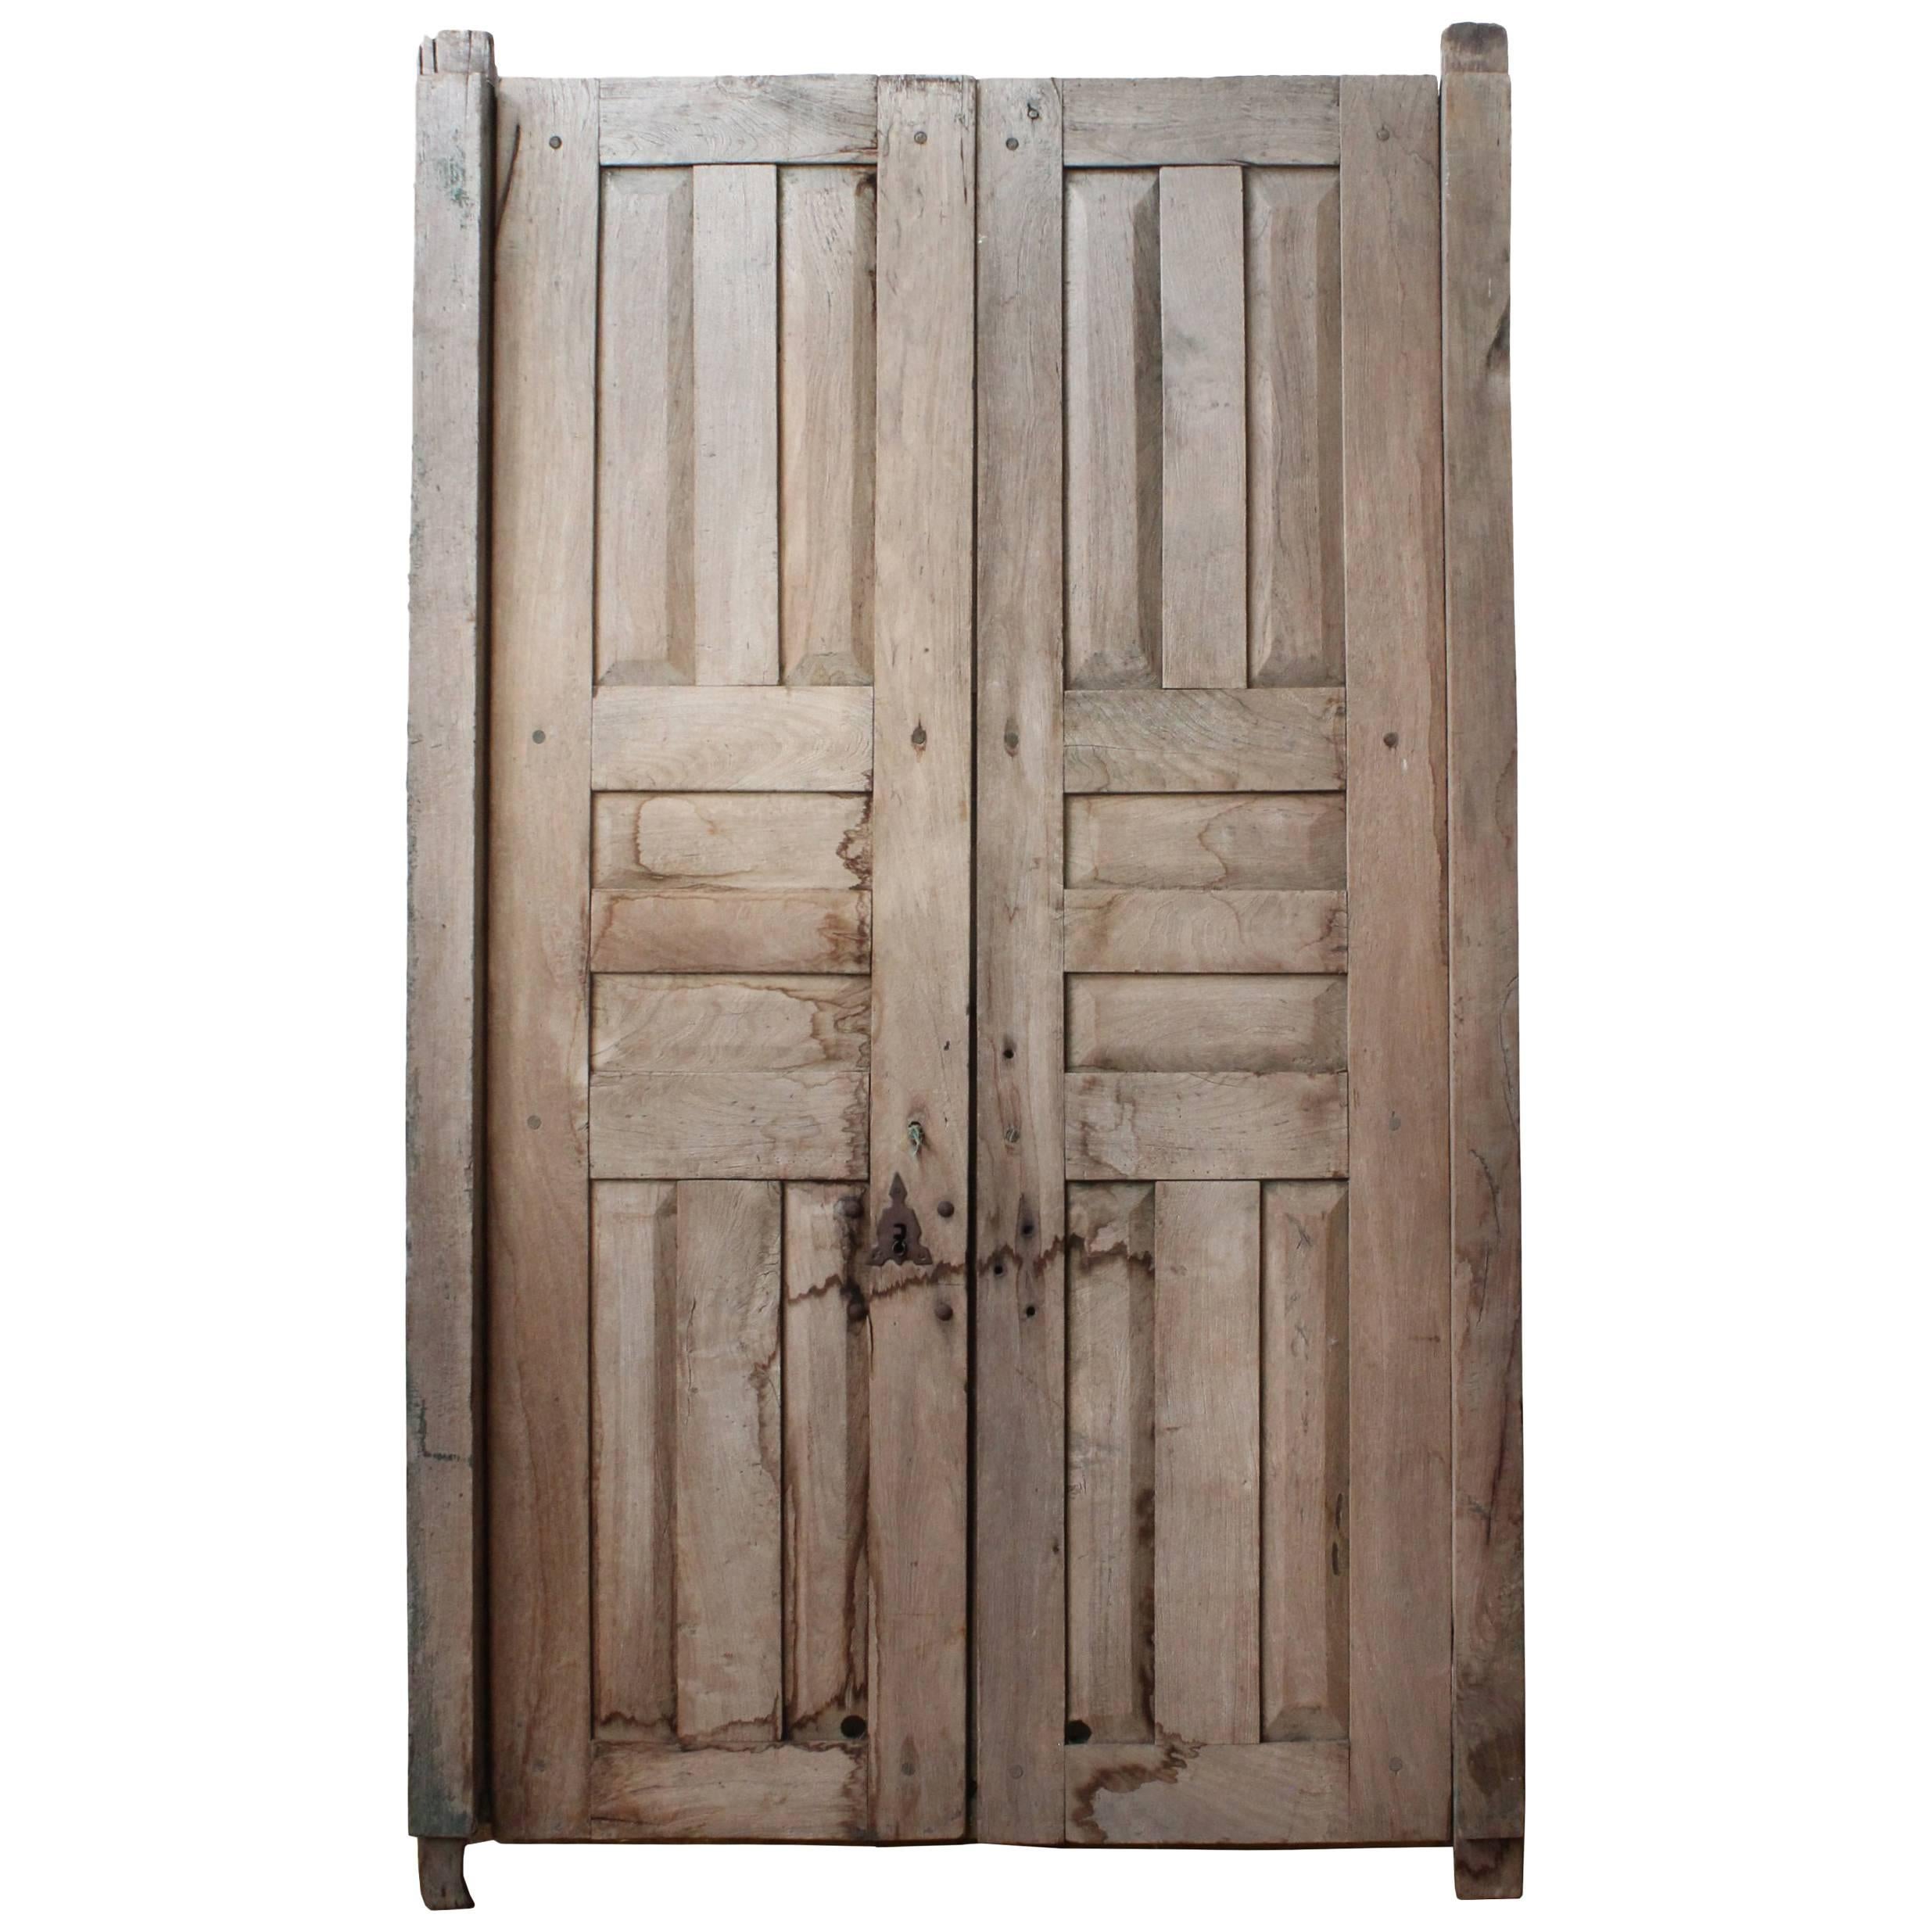 Early 20th Century Solid Mesquite Wood Door Found in Western México